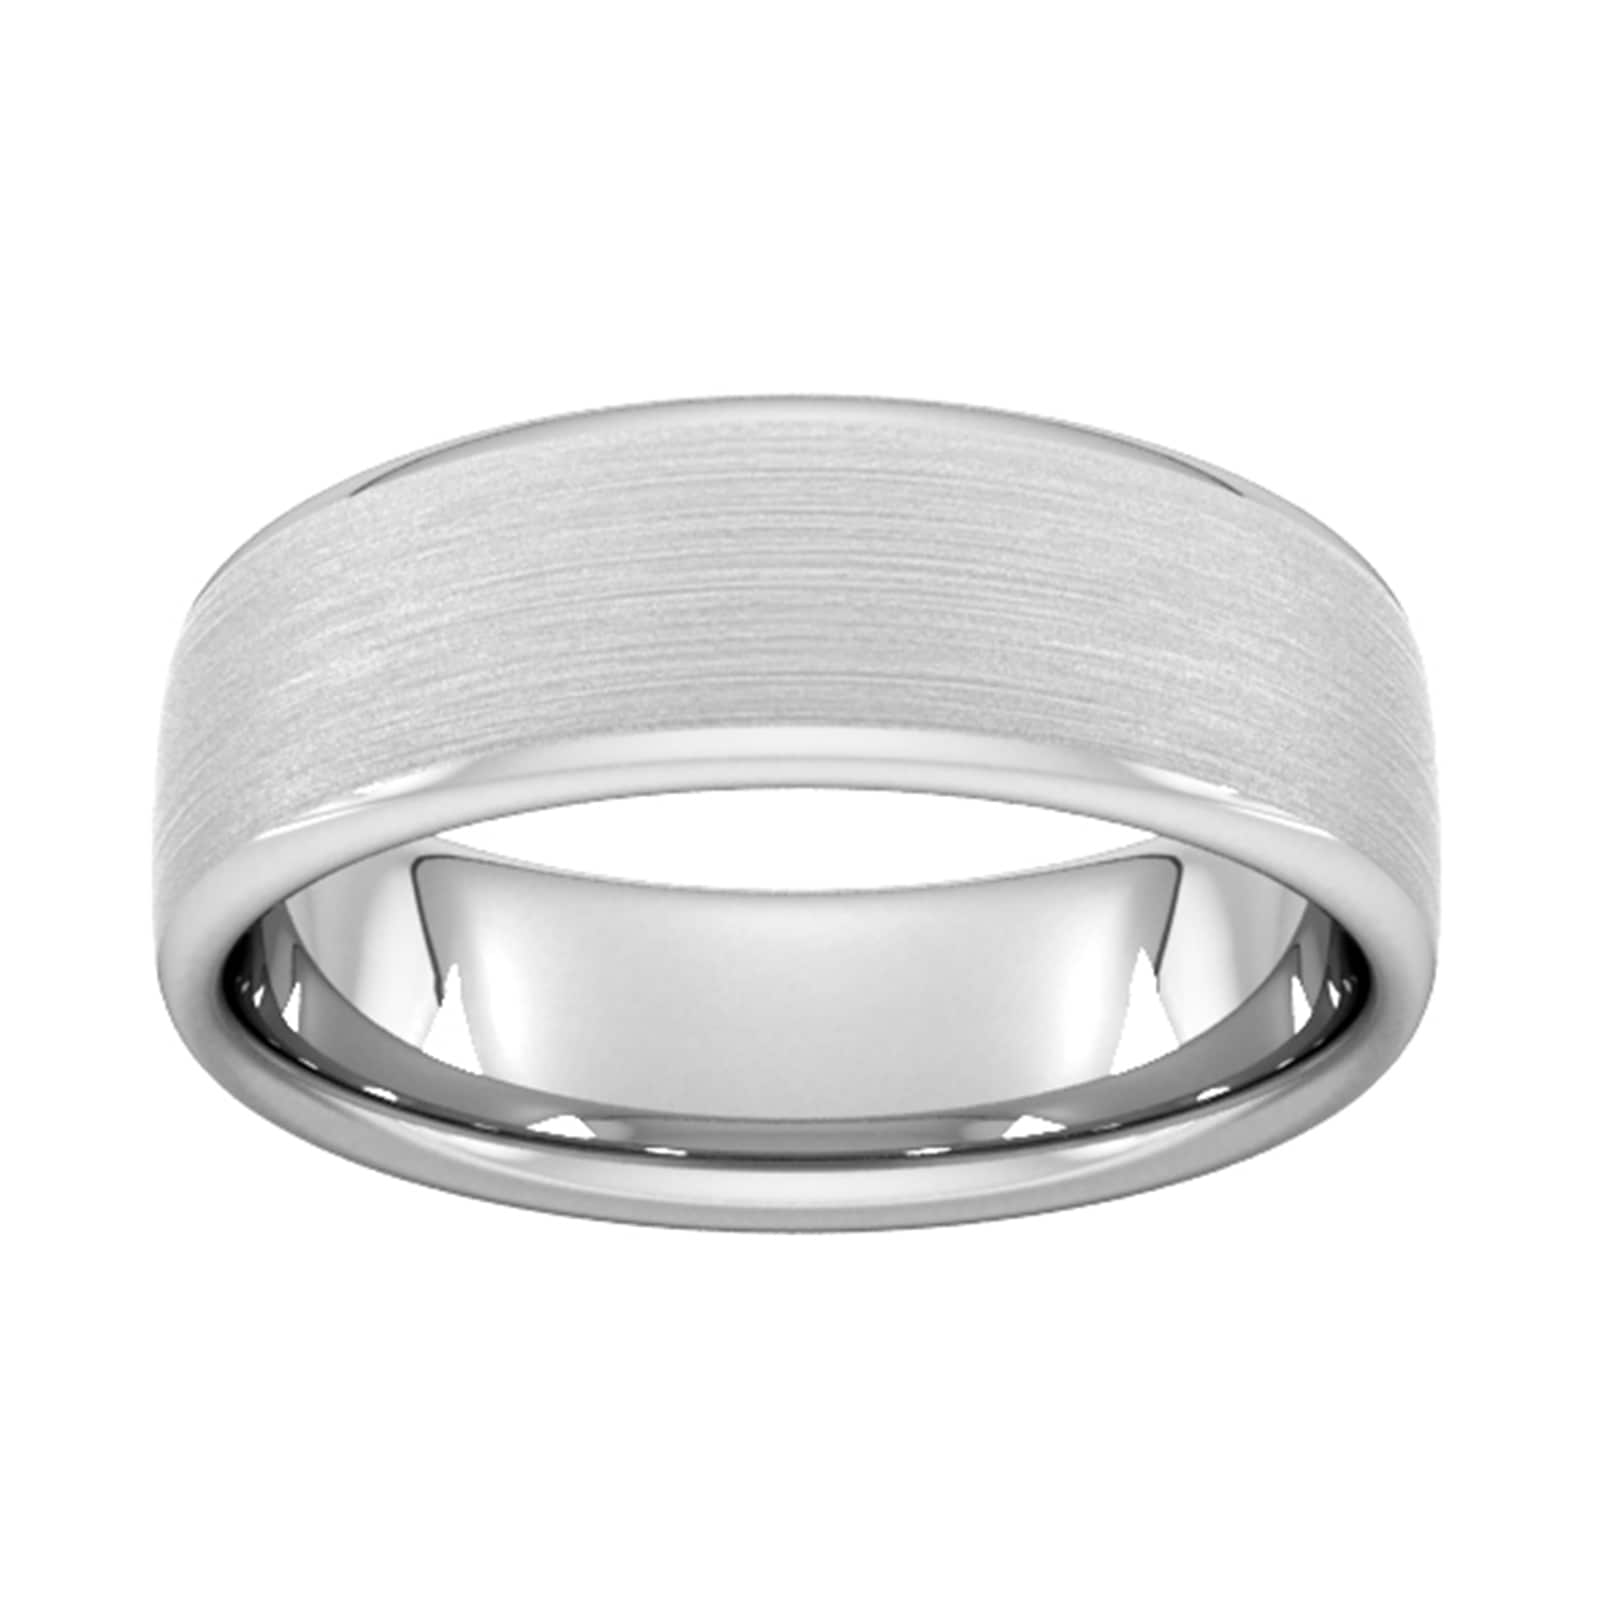 7mm D Shape Standard Matt Finished Wedding Ring In 9 Carat White Gold - Ring Size M